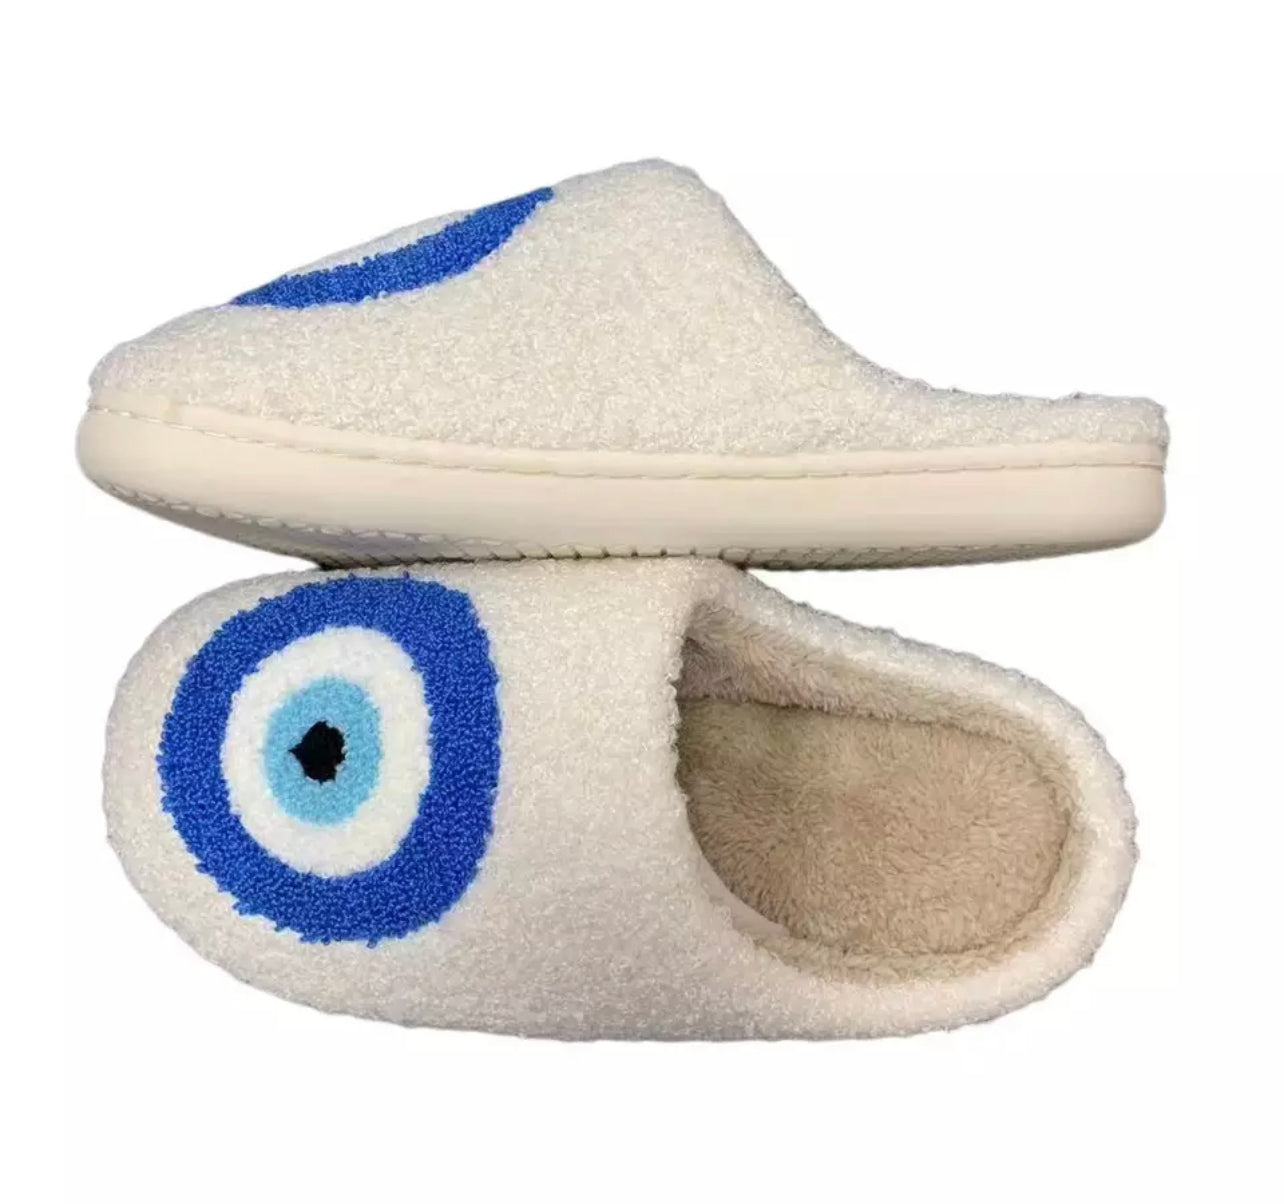 Blue Eye Teddy Slippers